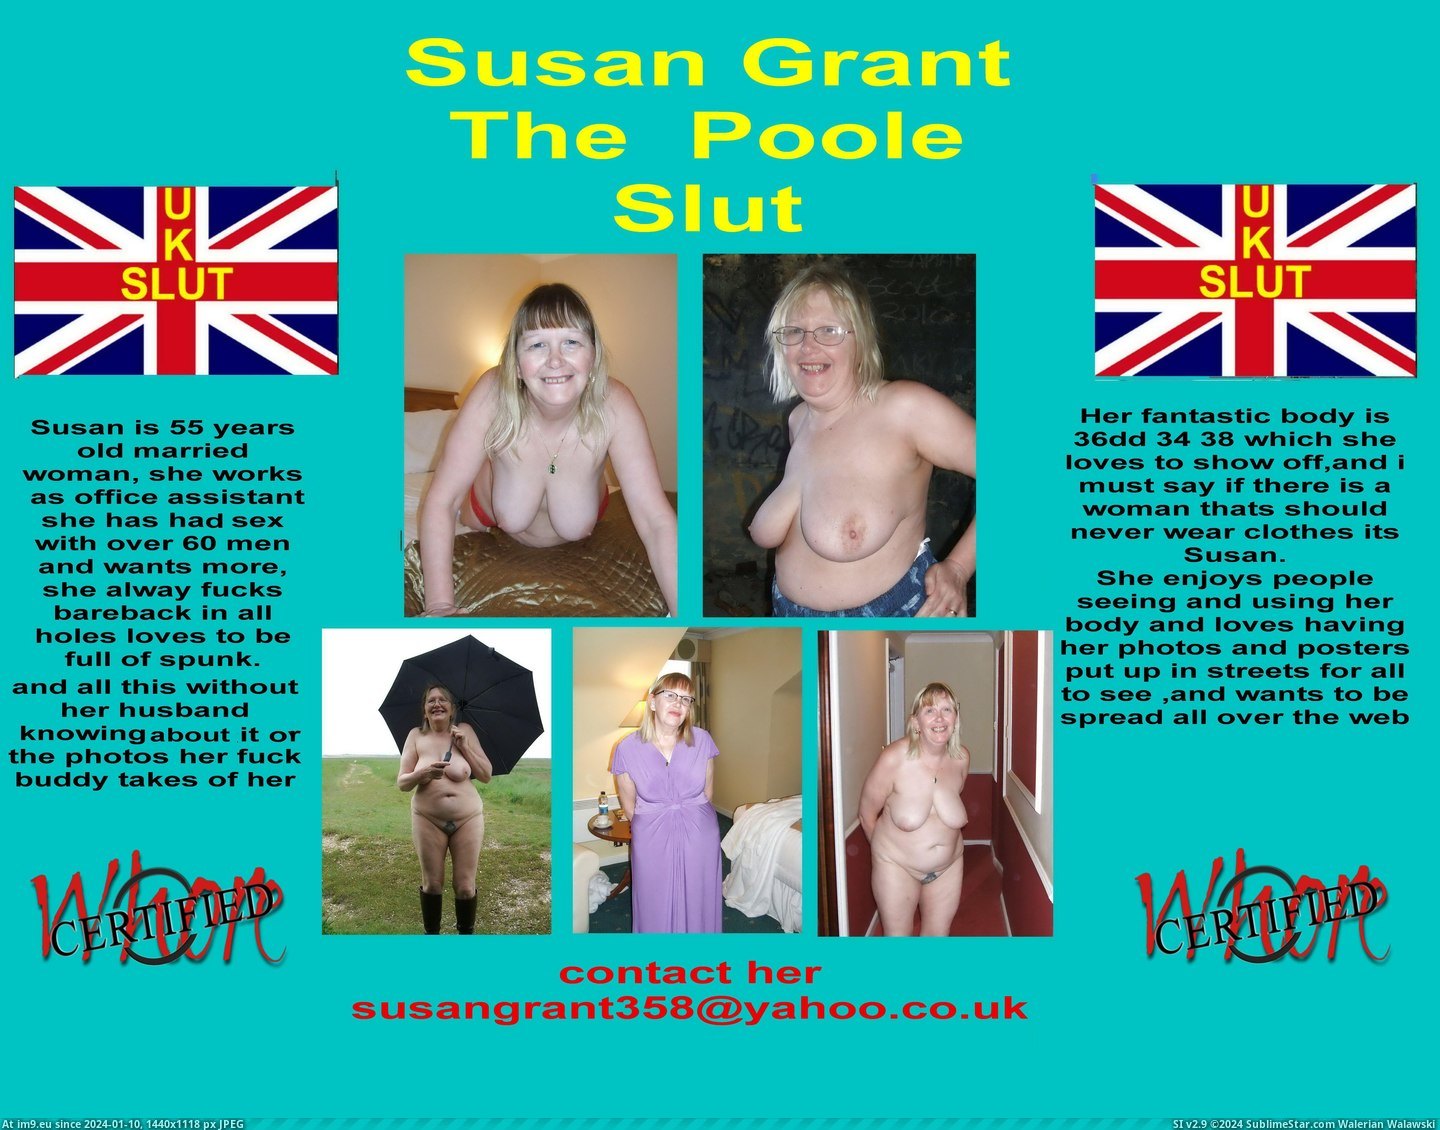  #Poster  suesan poster 2 Pic. (Bild von album Susan Grant of Poole Dorset))